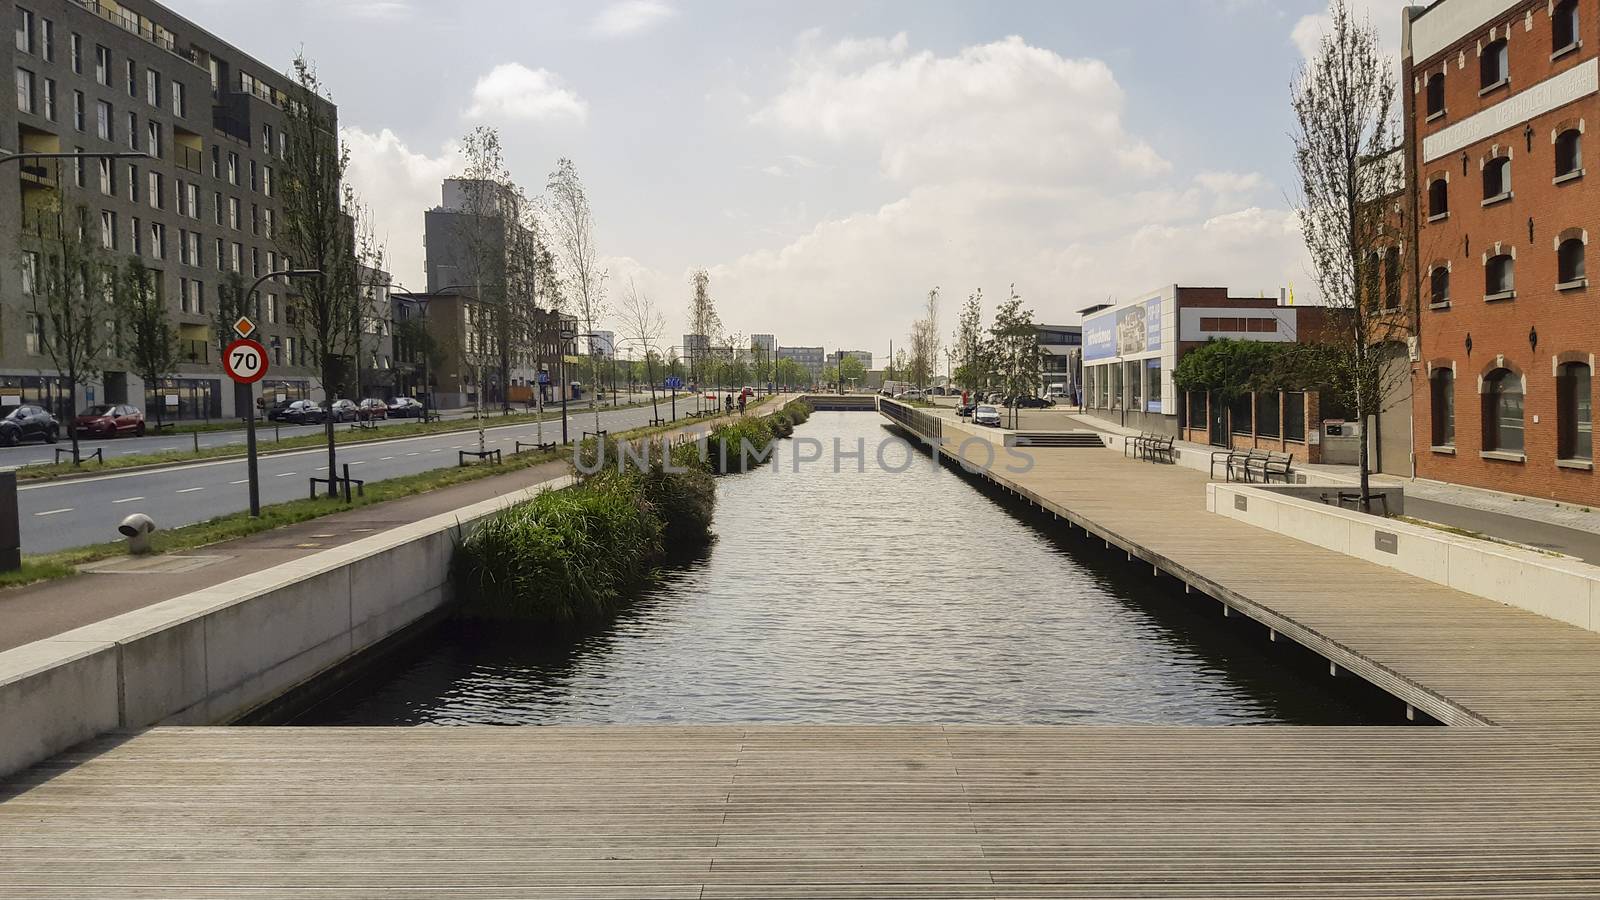 Antwerp, Belgium, July 2020: wooden walkway and esplanade on the canal on the IJzerlaan in Antwerp, Belgium. City renewal project. Canal connecting Lobroekdok and Asiadok.